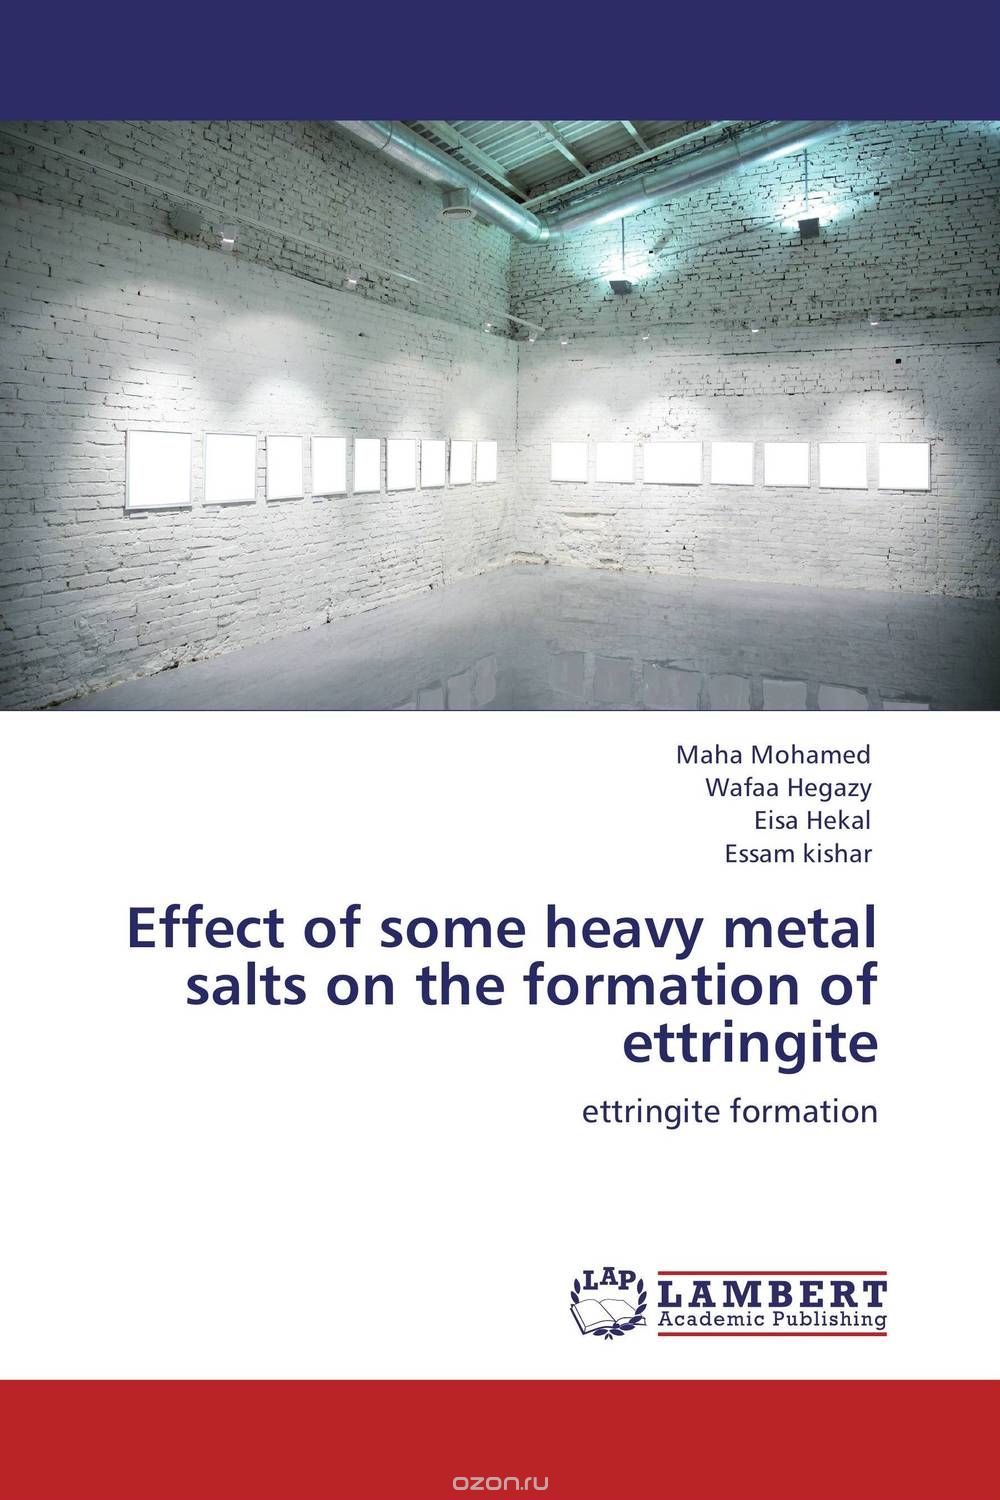 Скачать книгу "Effect of some heavy metal salts on the formation of ettringite"